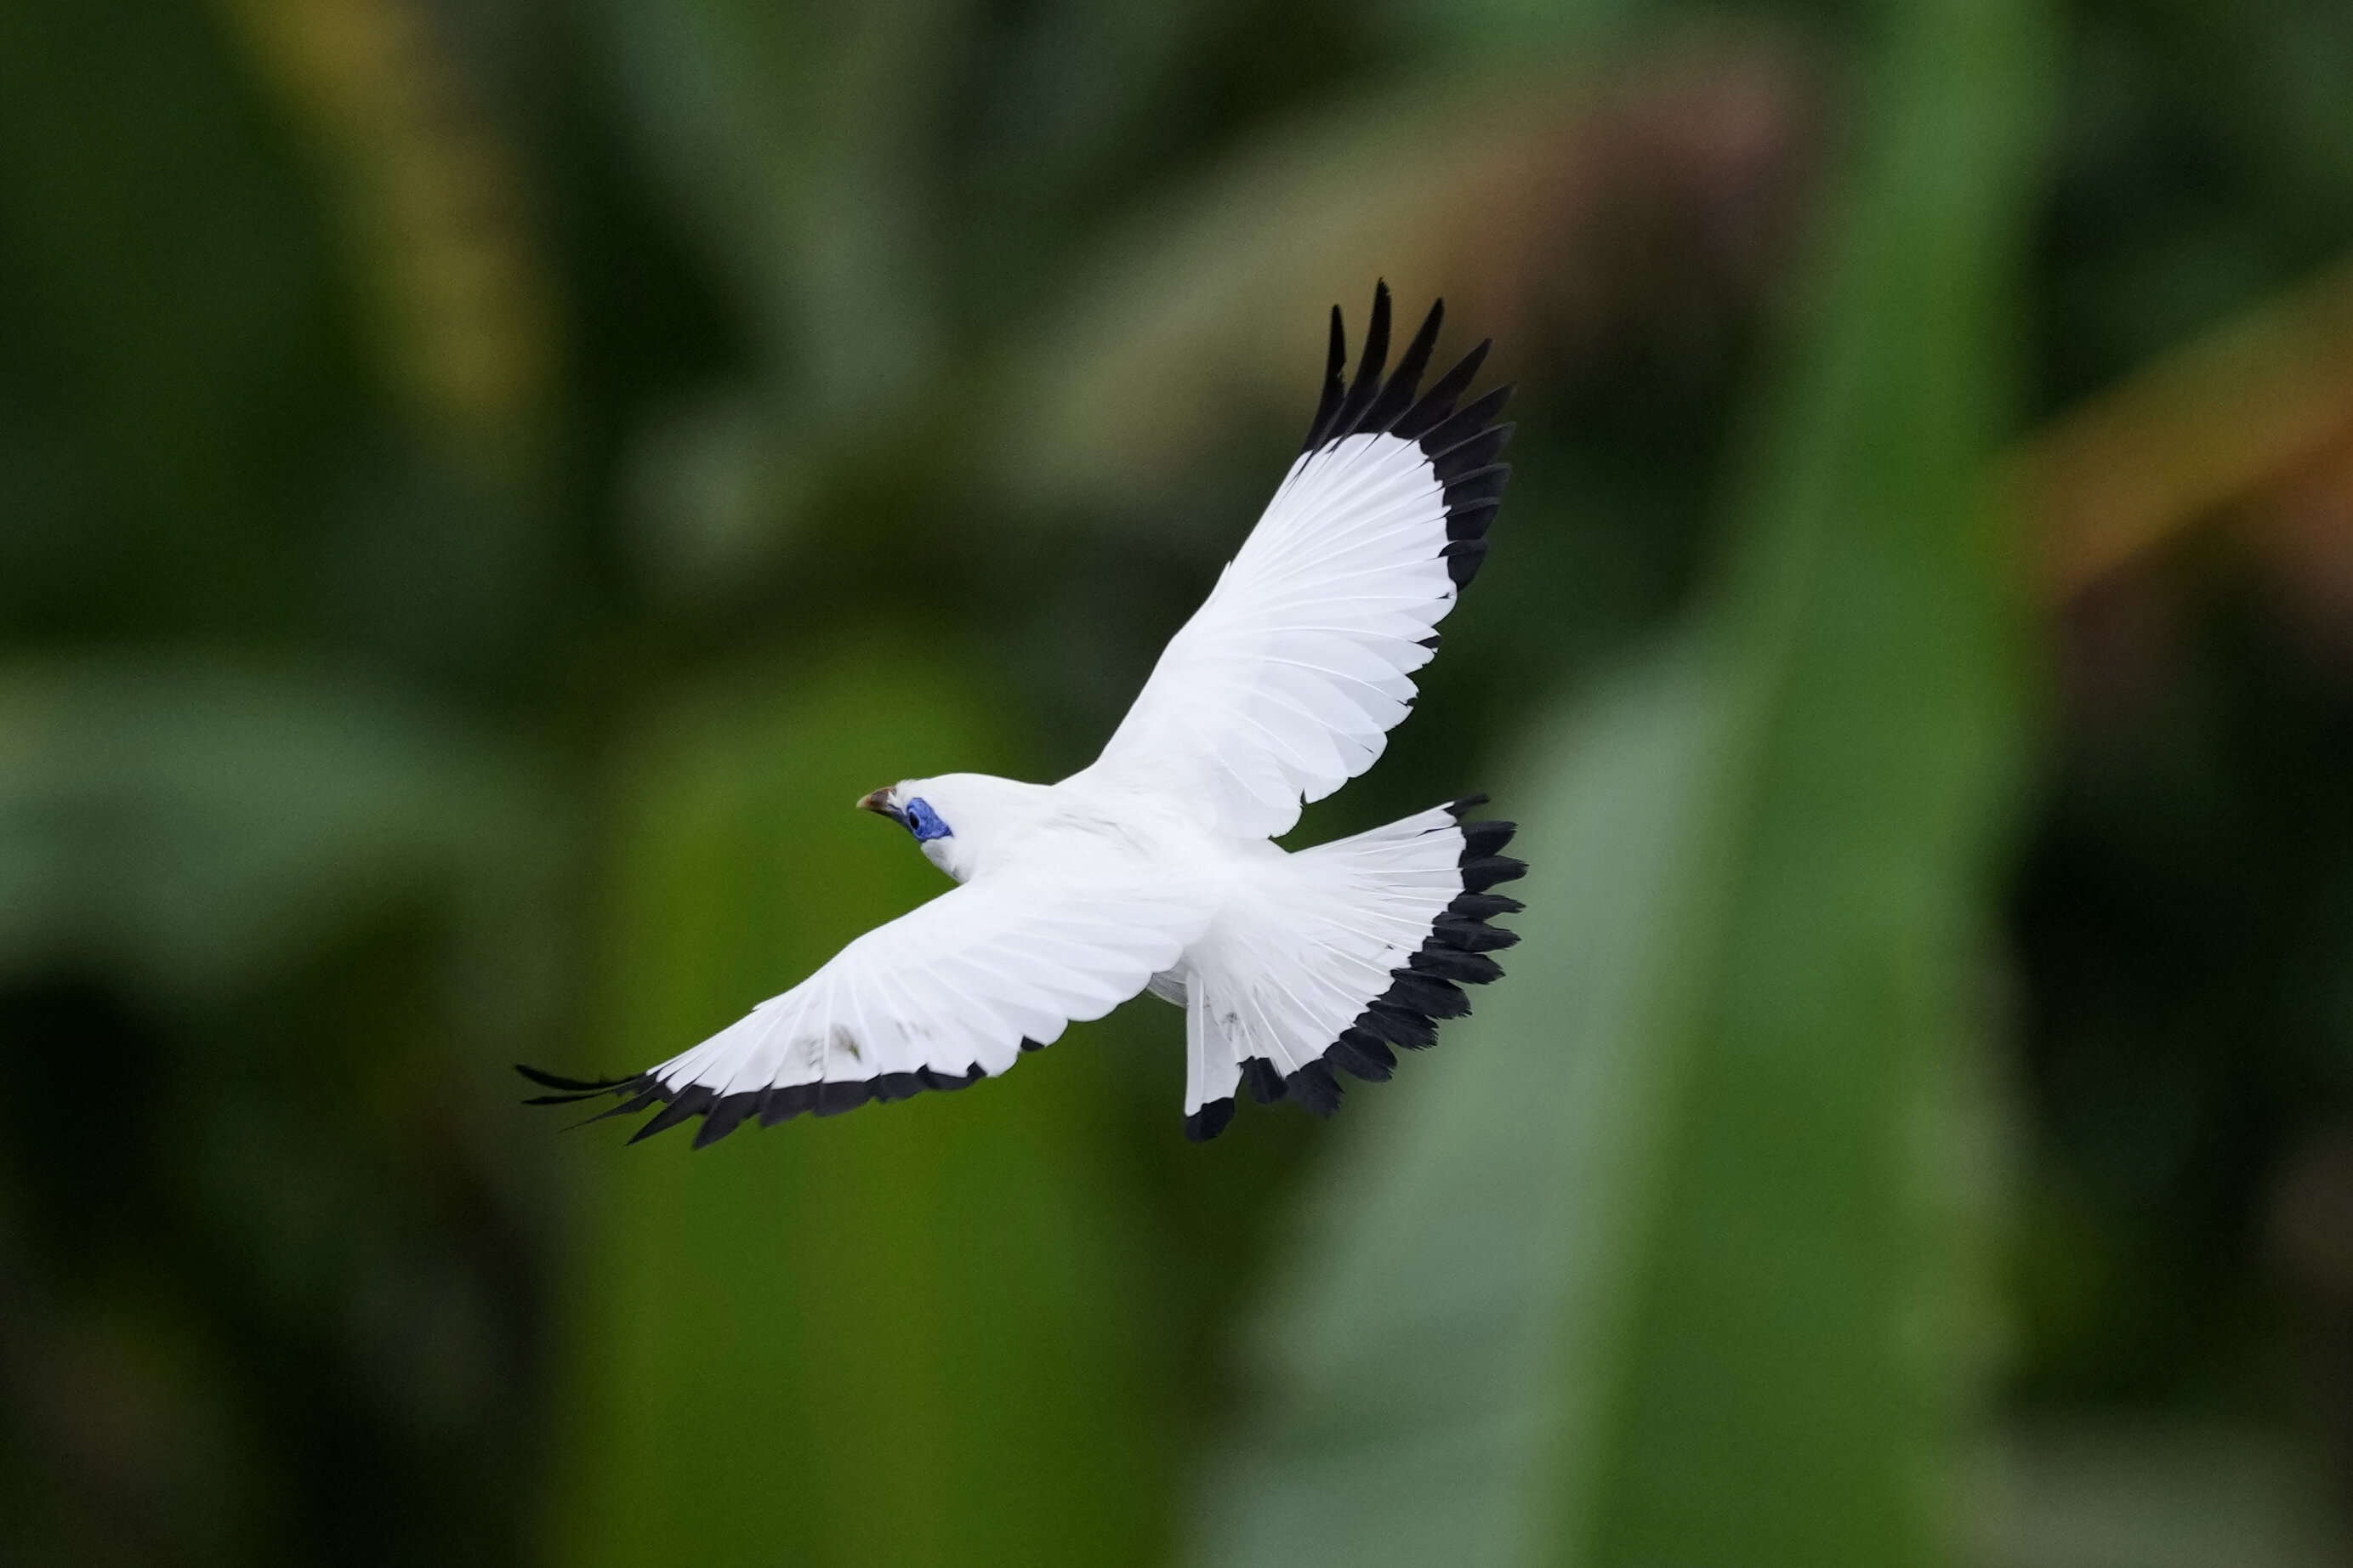 #In Bali, bird sellers help endangered mynah make a comeback